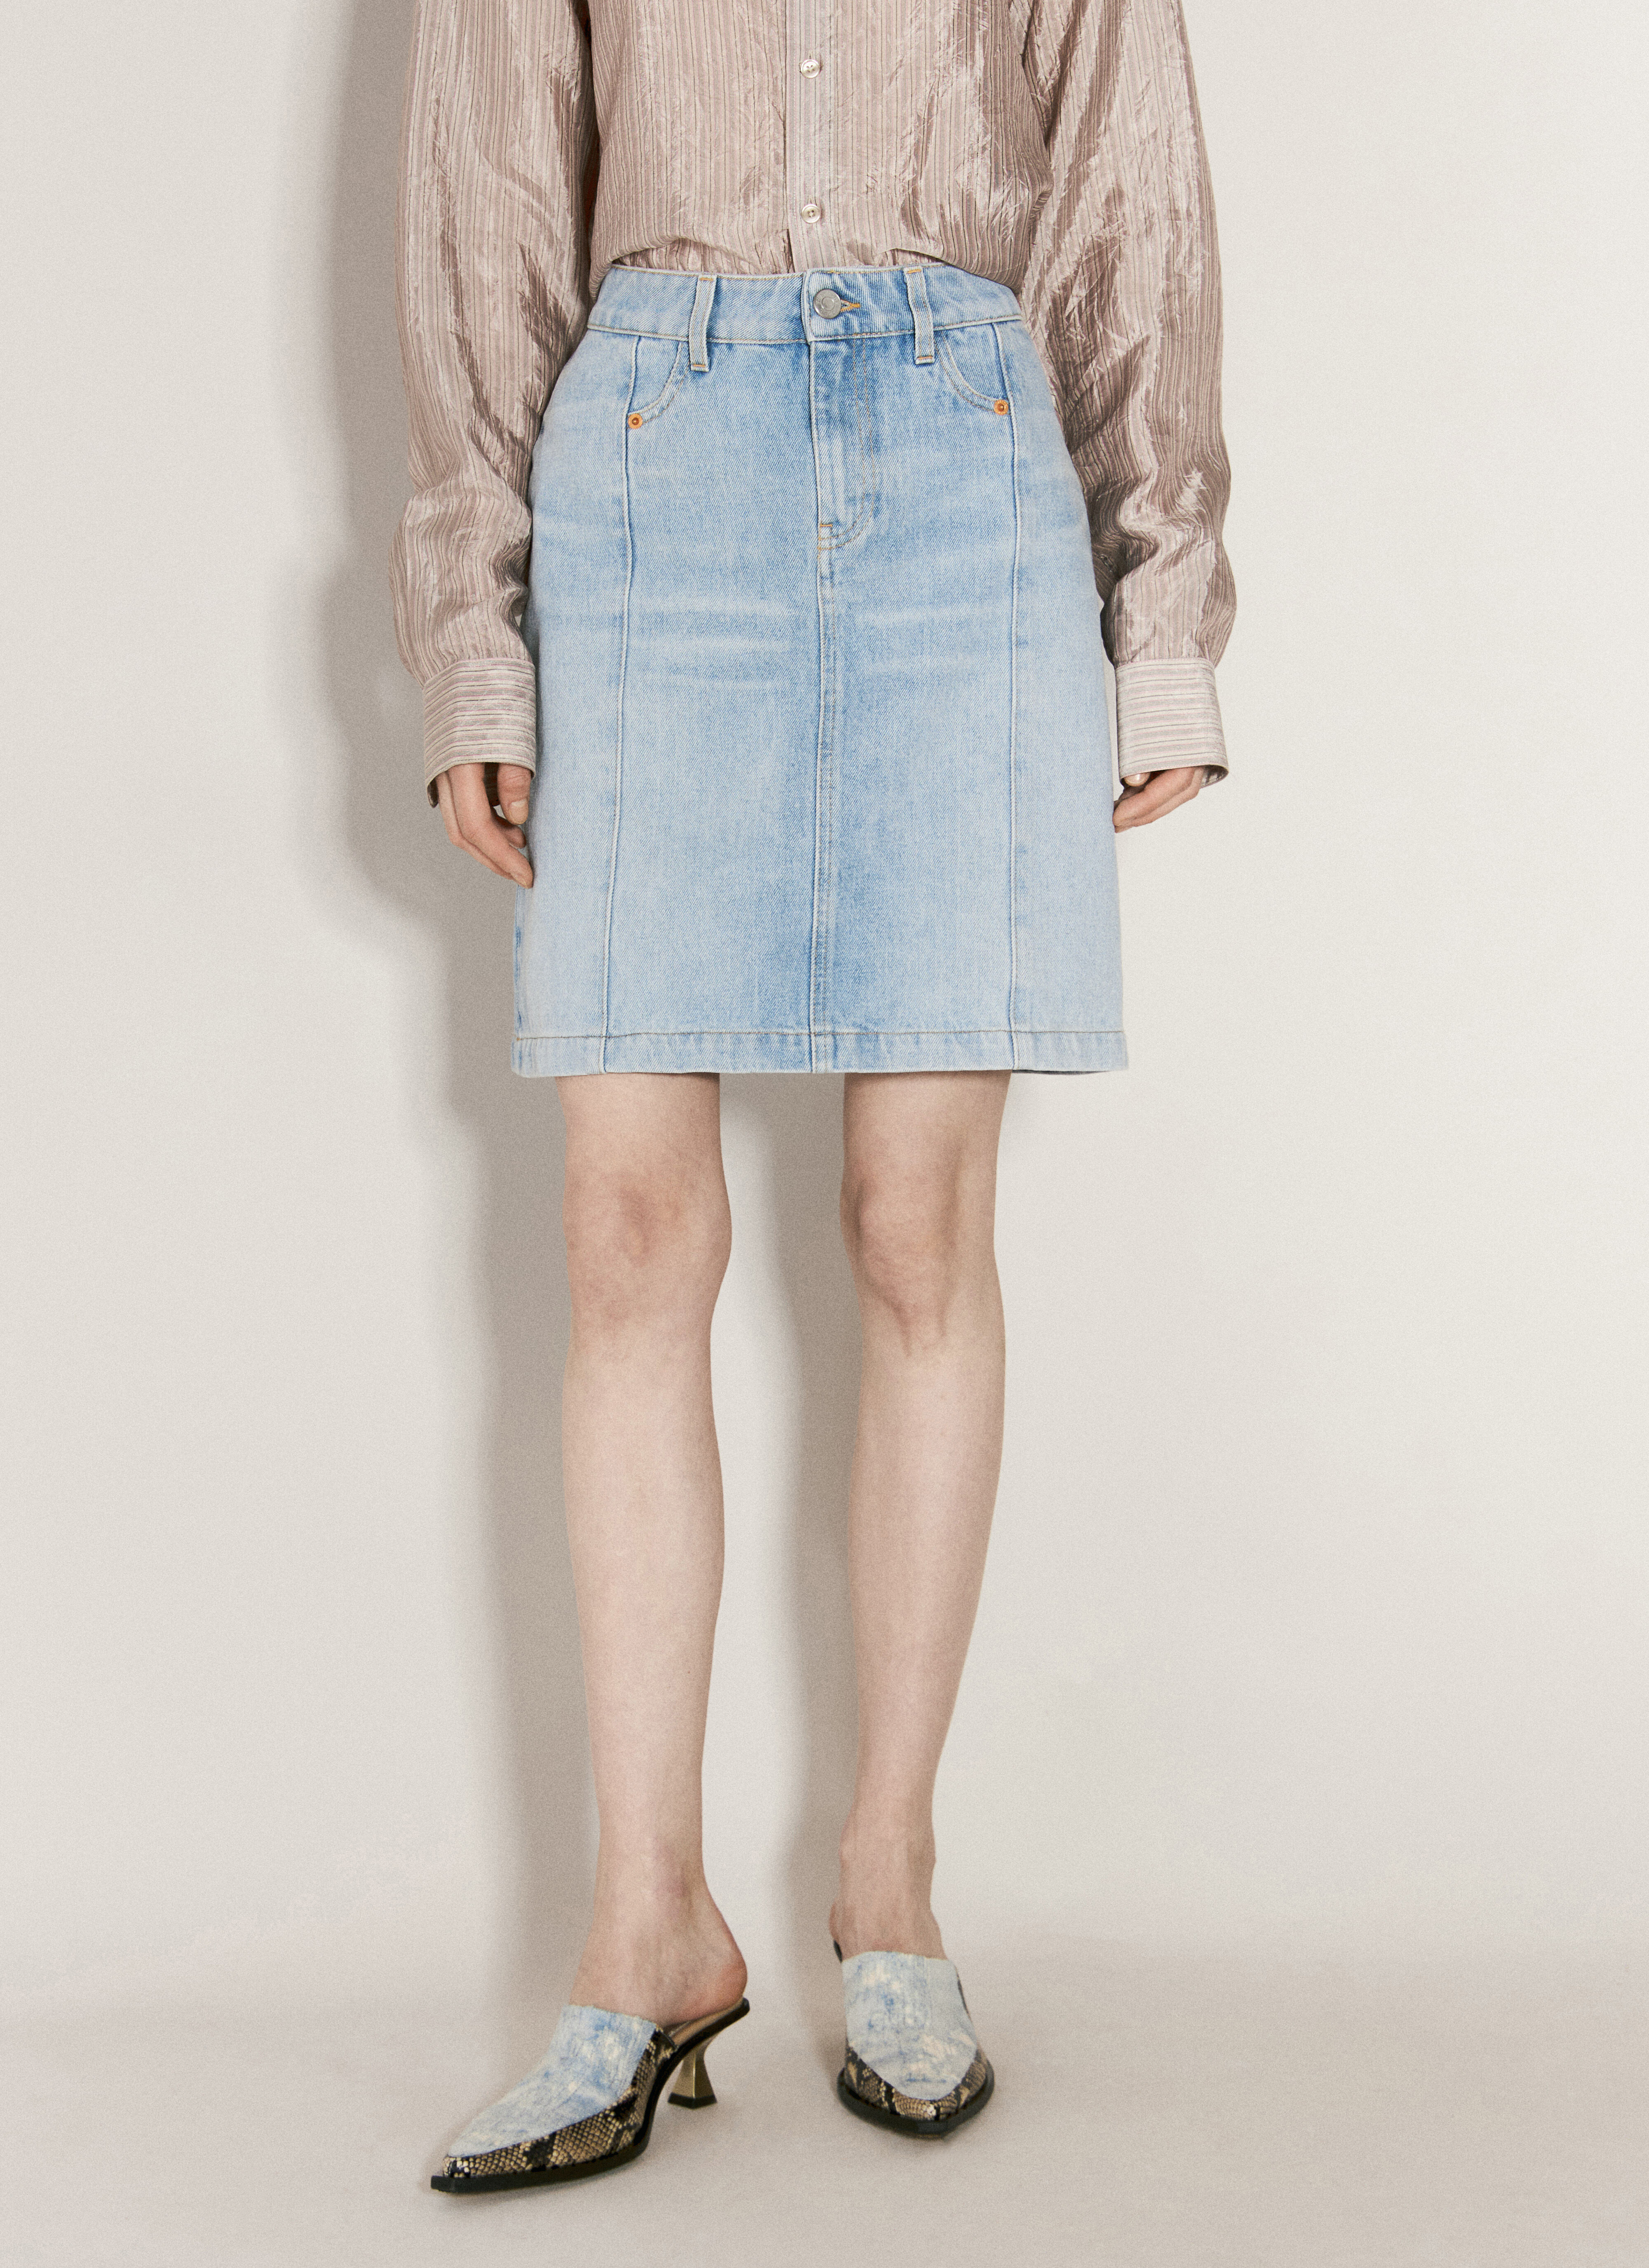 Martine Rose Narrow Front Mini Skirt Blue mtr0255010